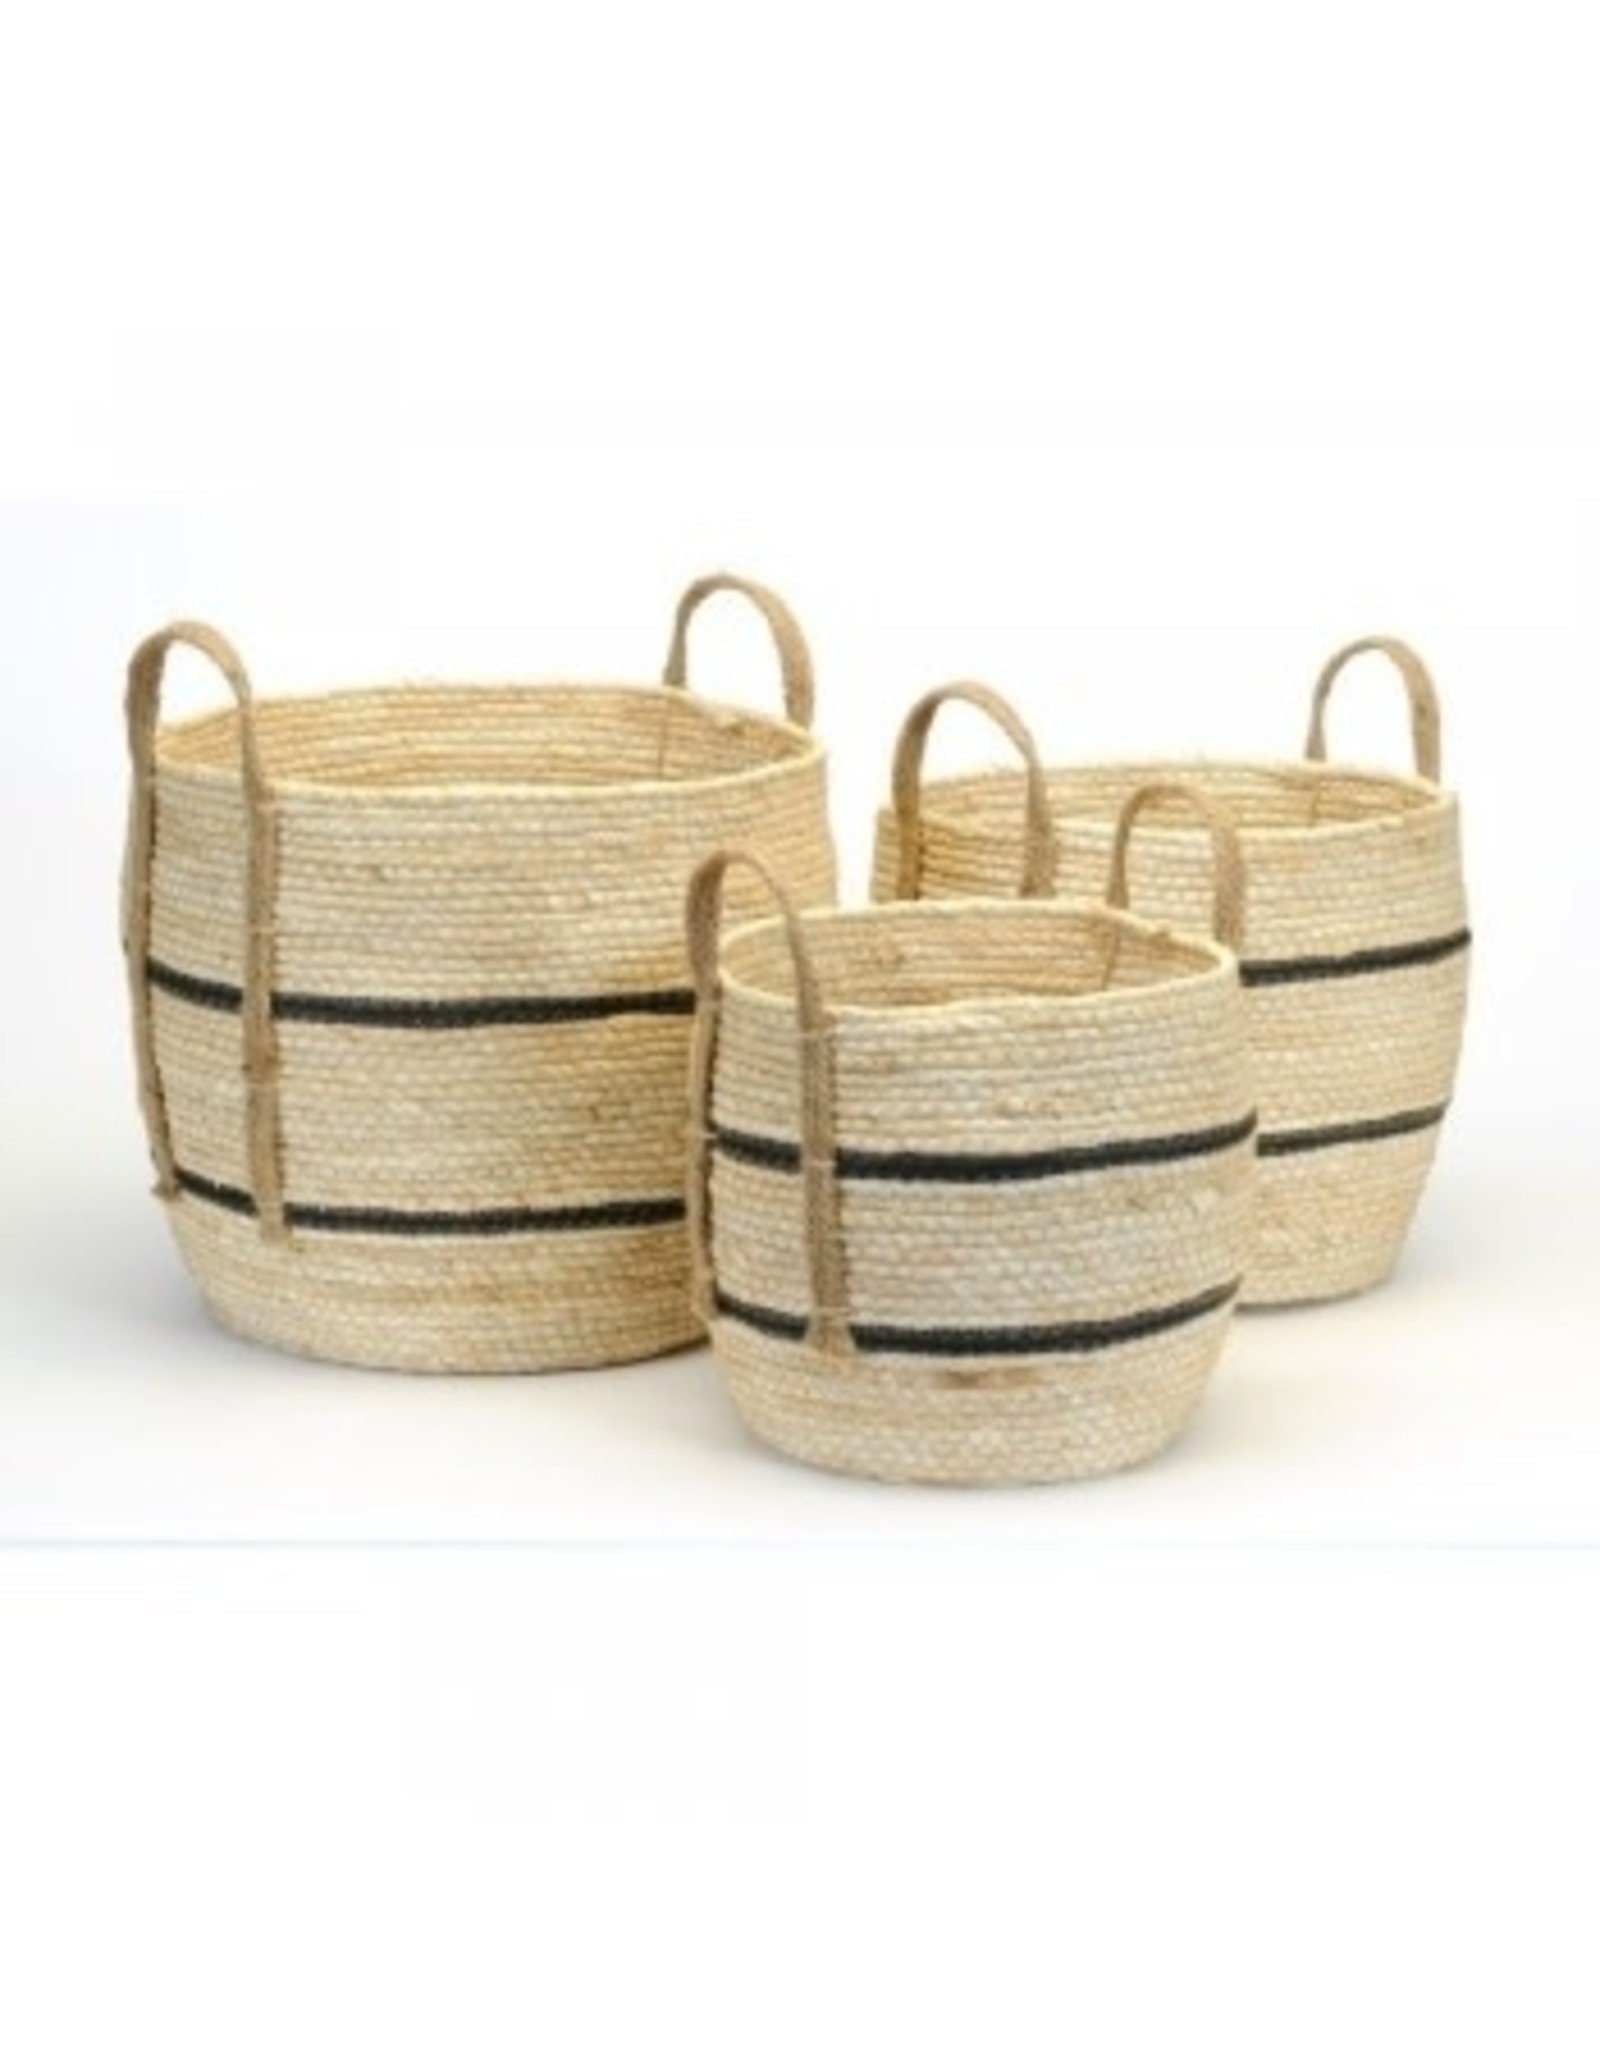 Hyacinth Basket with Black Stripes